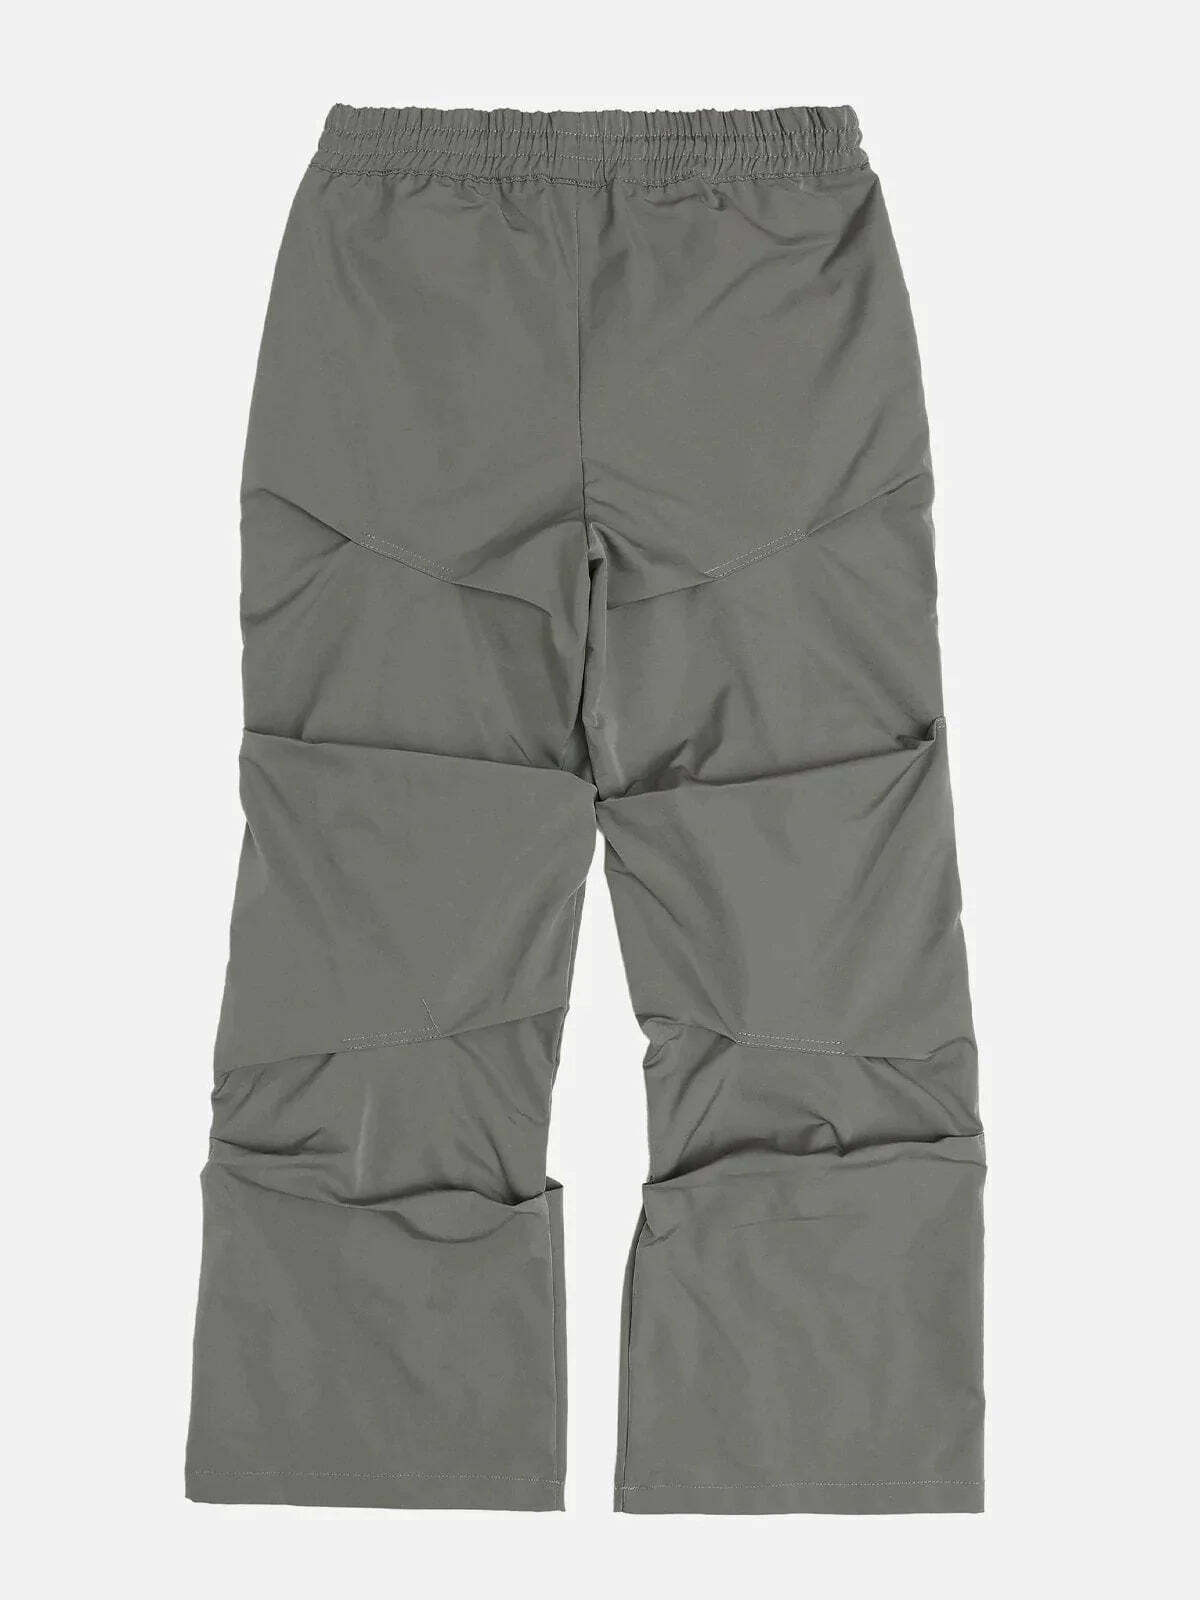 layered pleated pants edgy & versatile streetwear 8891